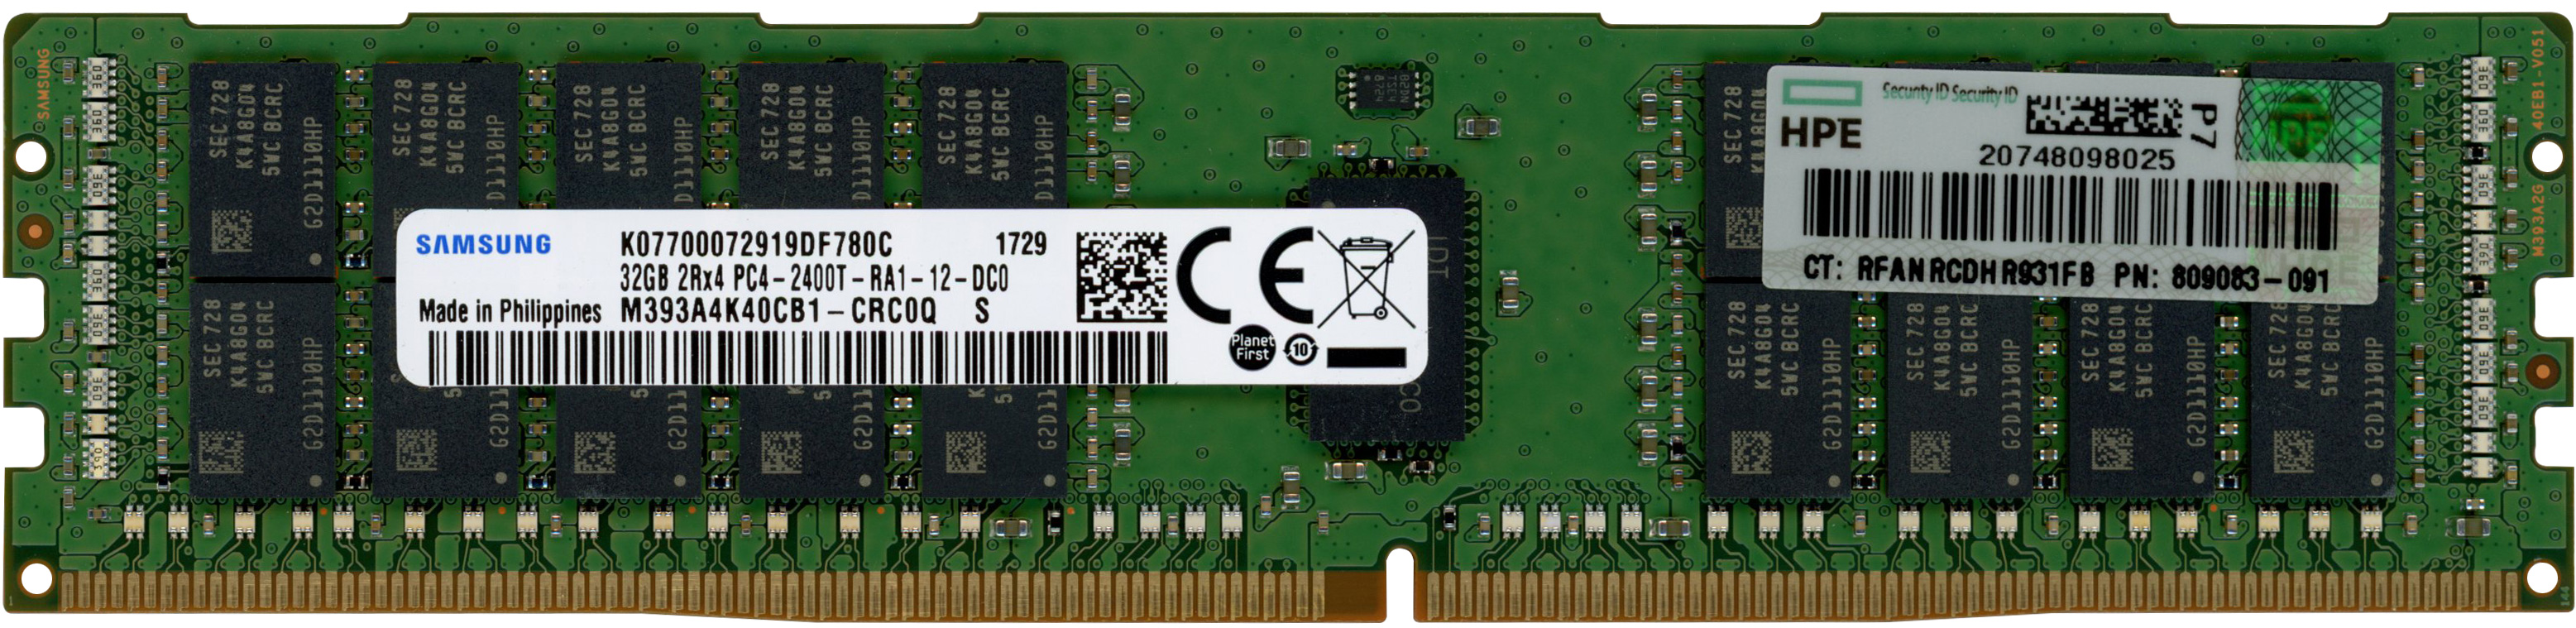 HP 32GB RAM-Modul DDR4 2400 MT/s PC4-2400T-R RDIMM ECC 809083-091, refurbished